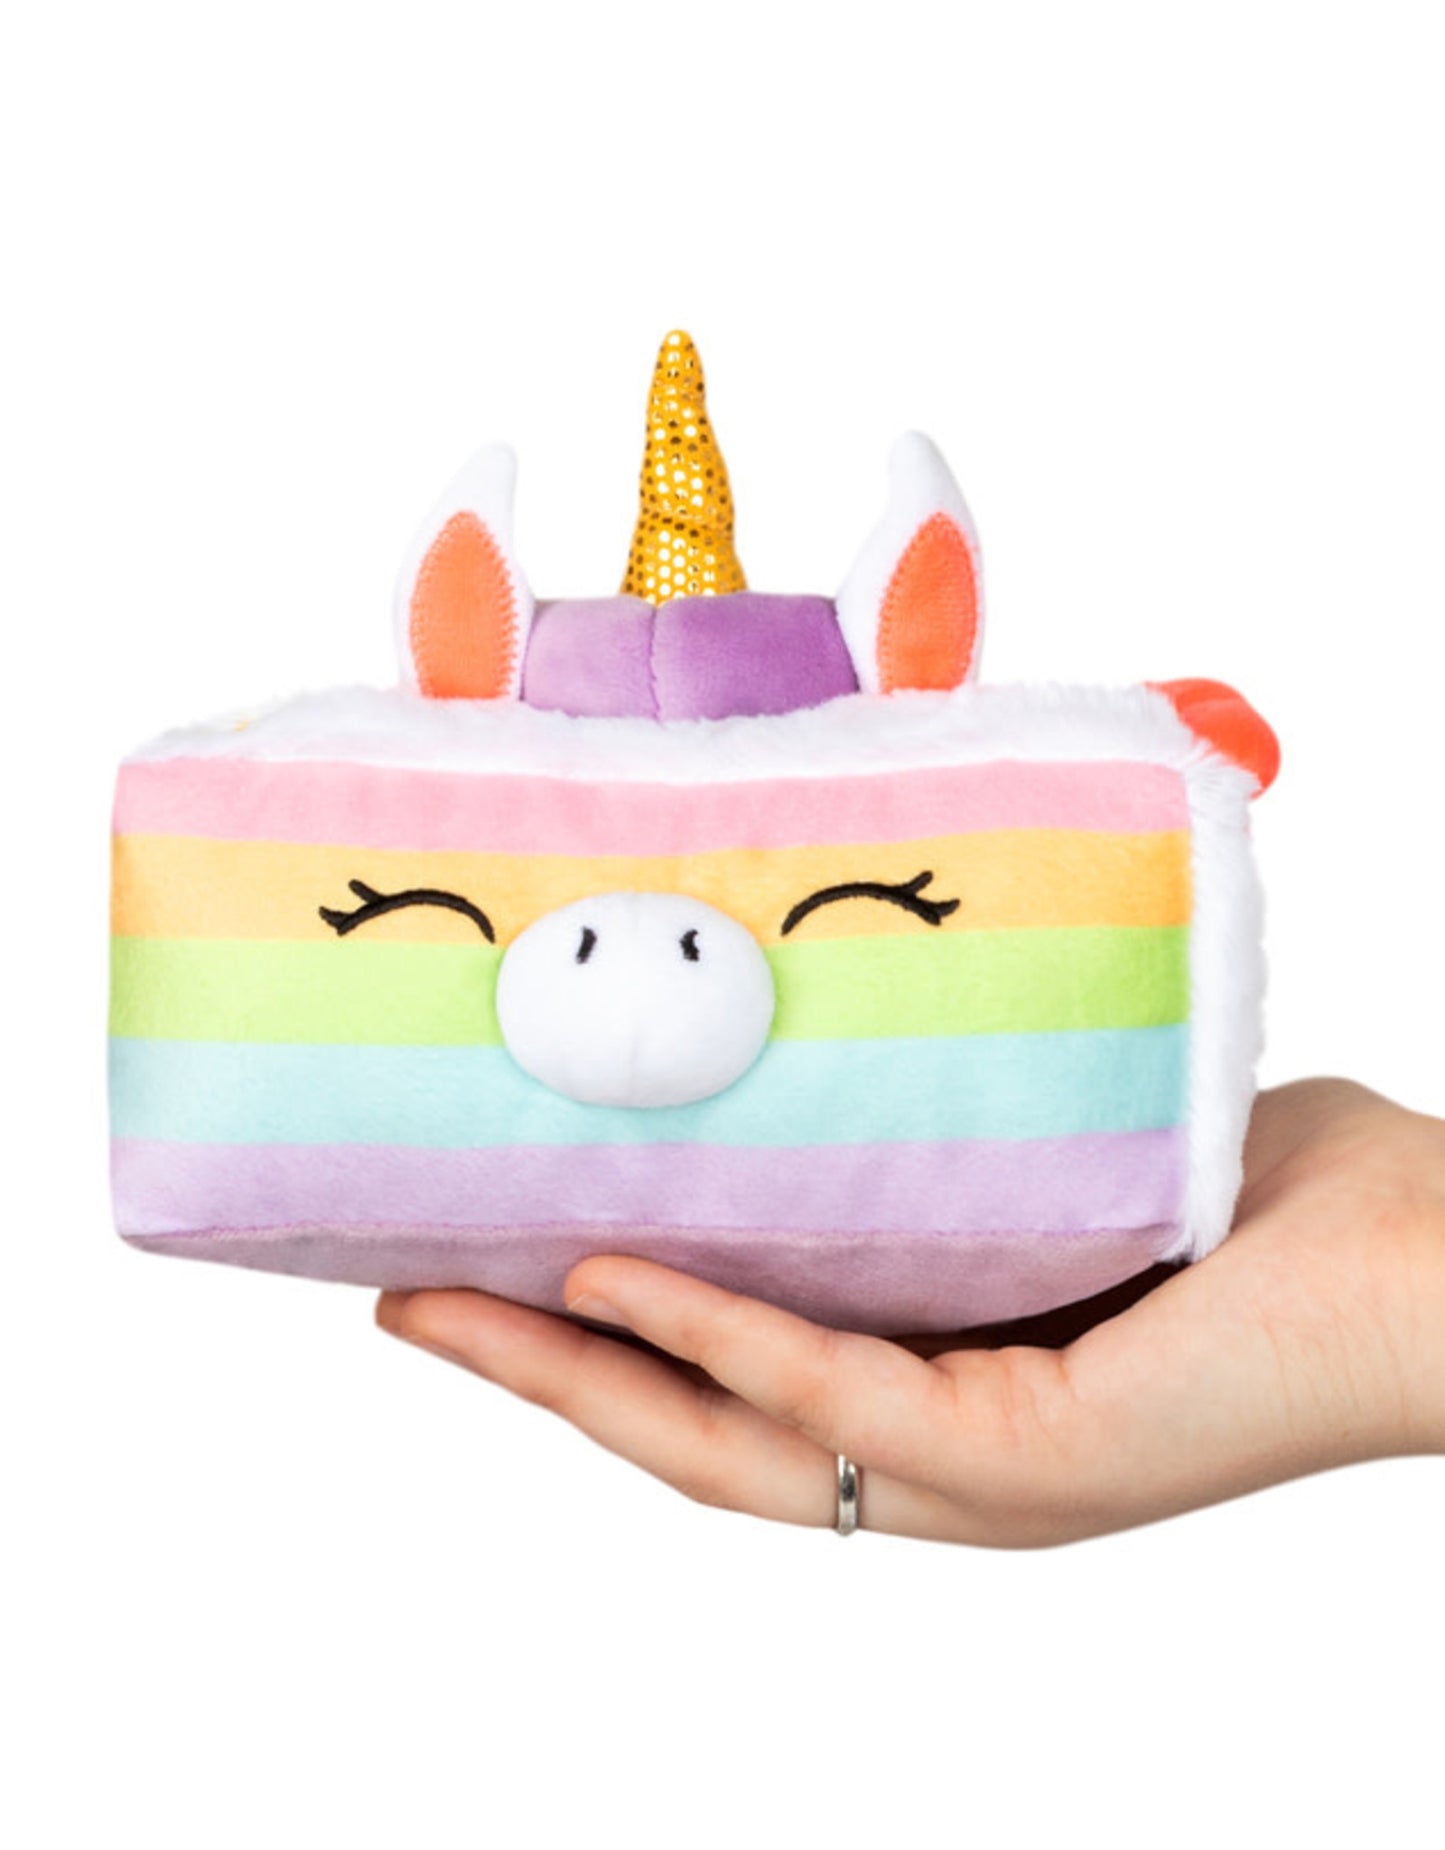 Snugglemi Snack Unicorn Cake 5" Plush